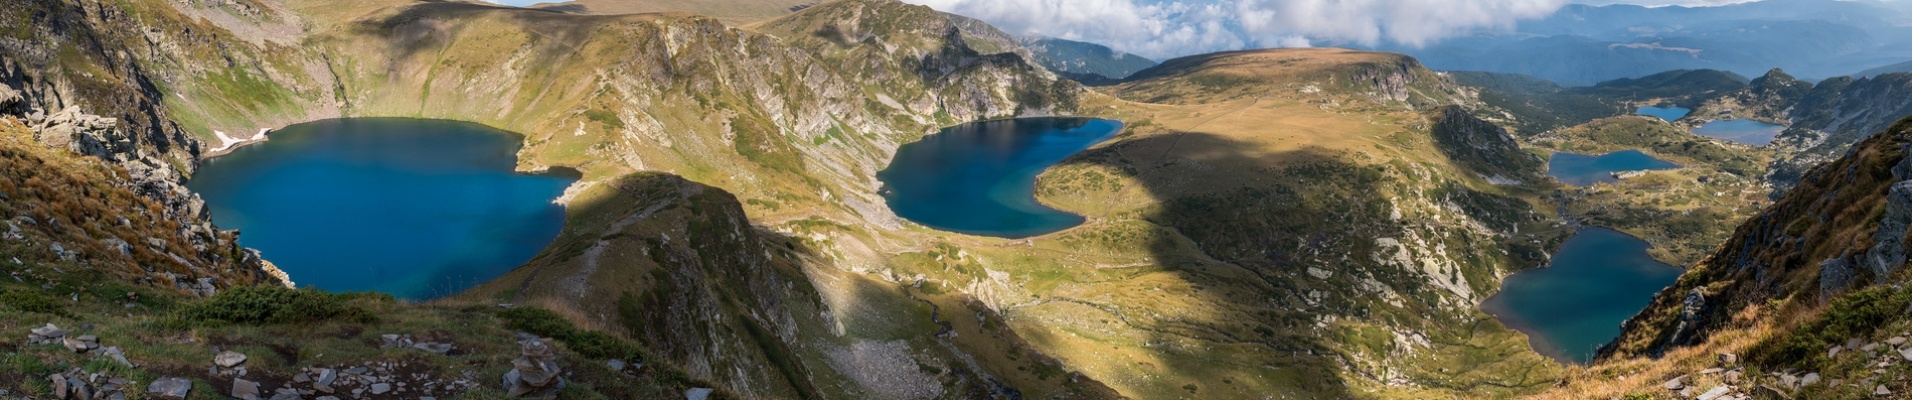 Lacs Rila Bulgarie